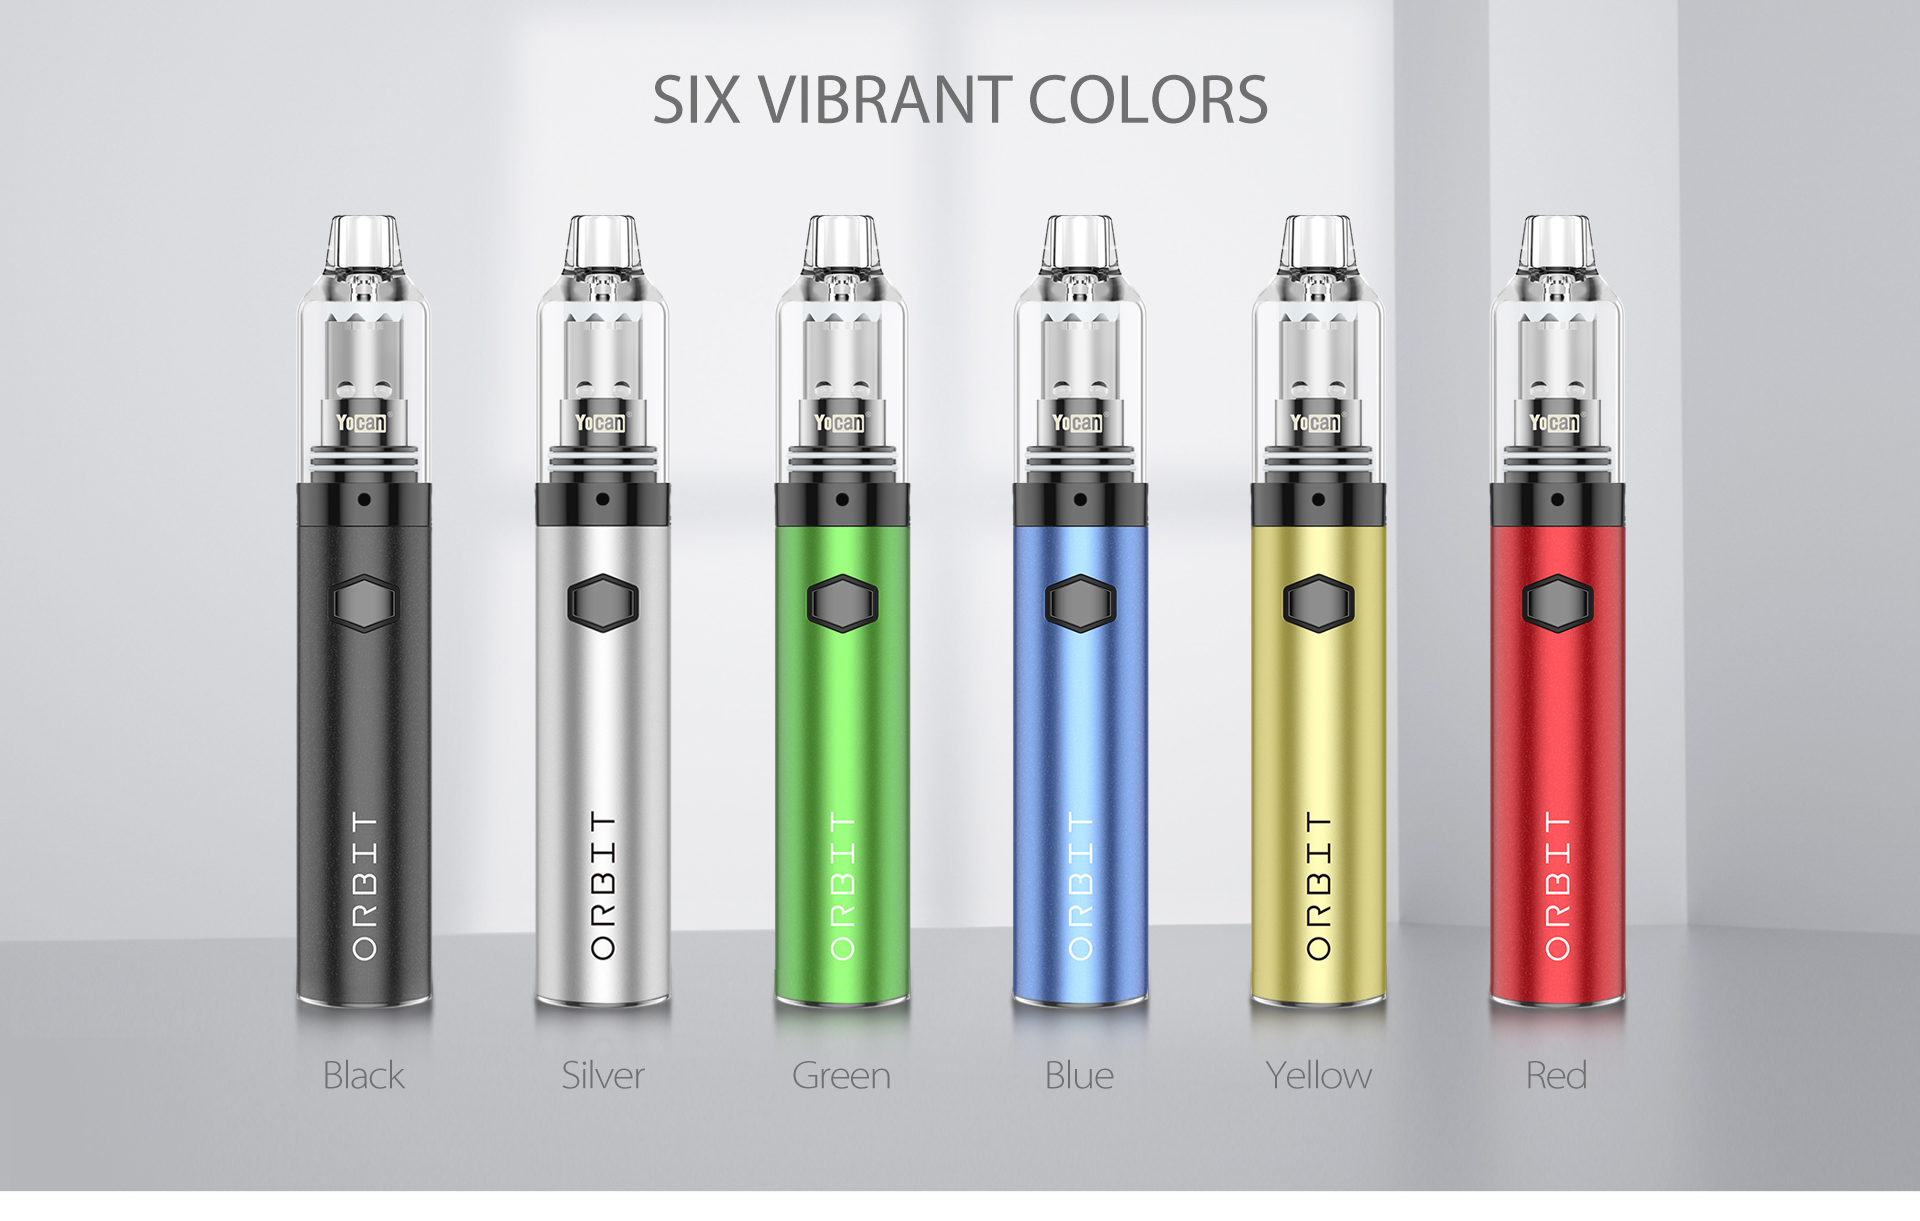 Yocan Orbit vape pen comes with 6 colors.